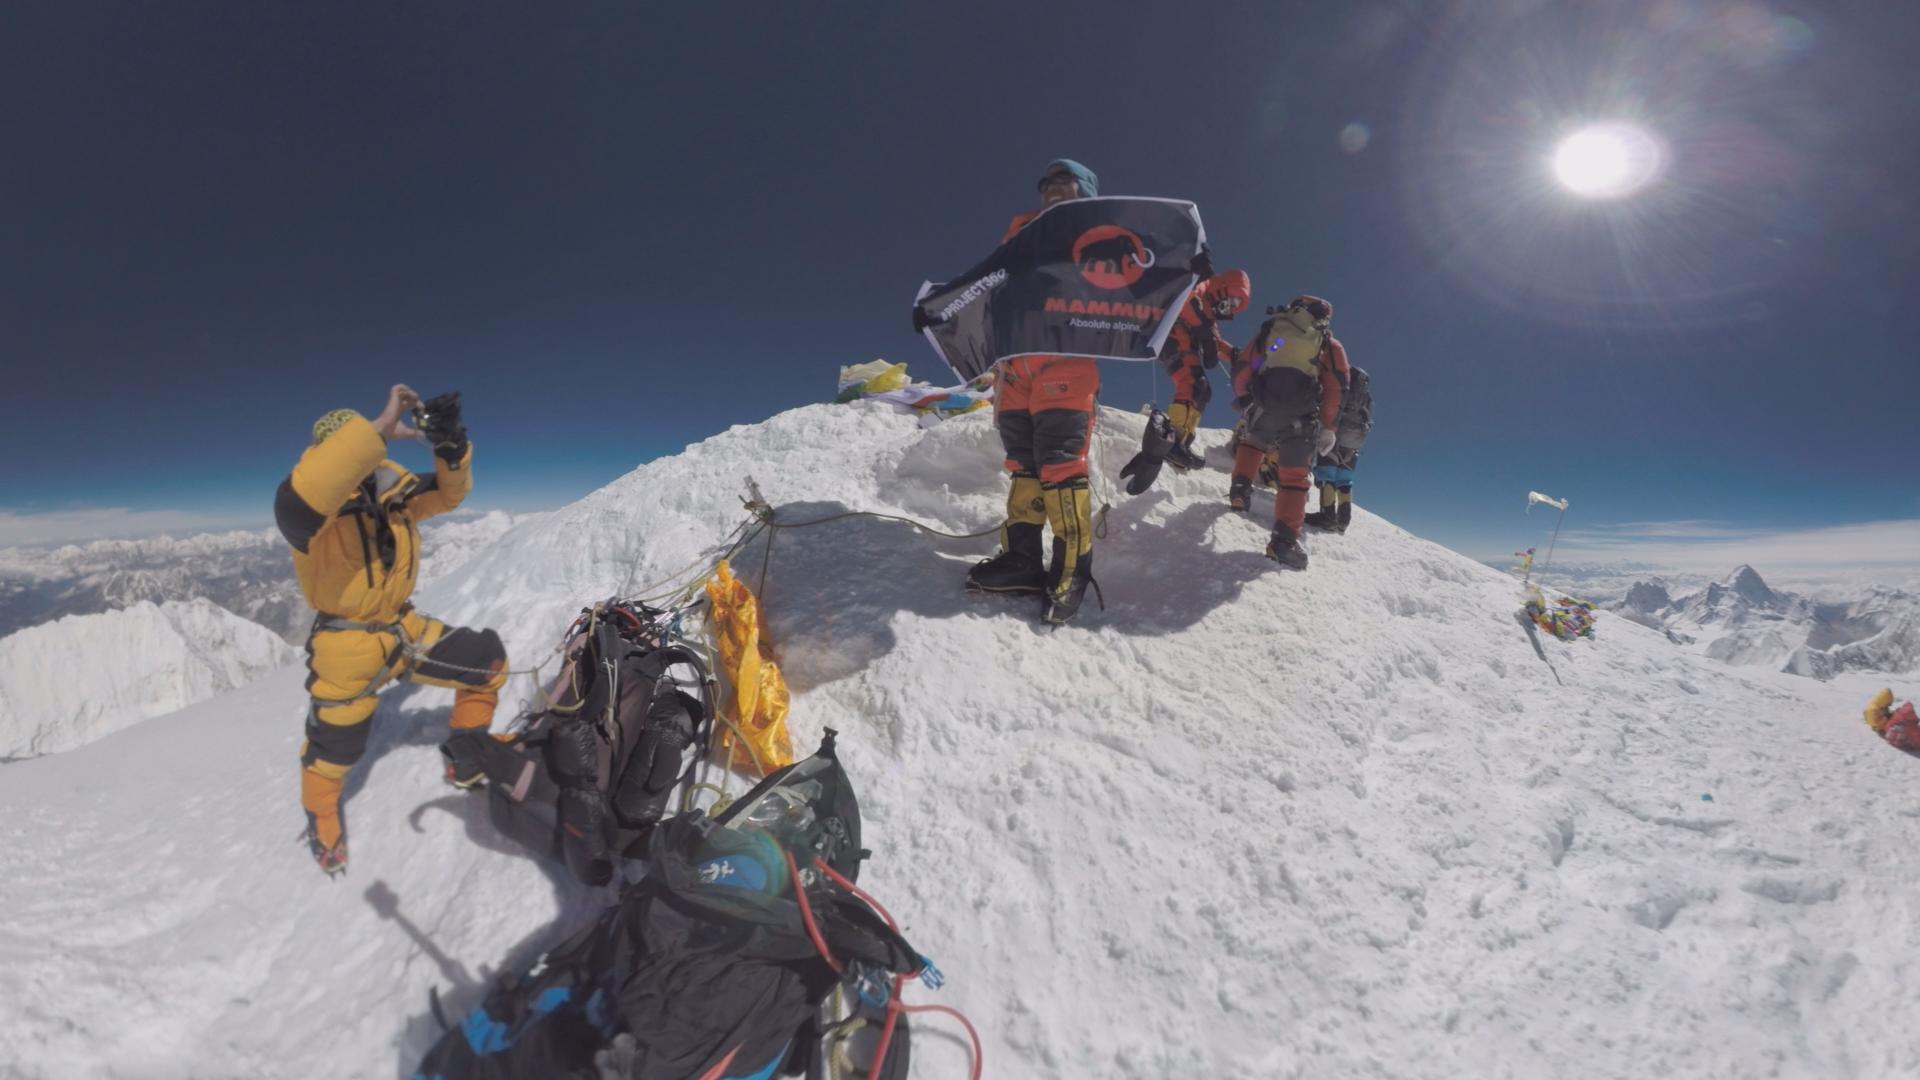 #project360: Mount Everest